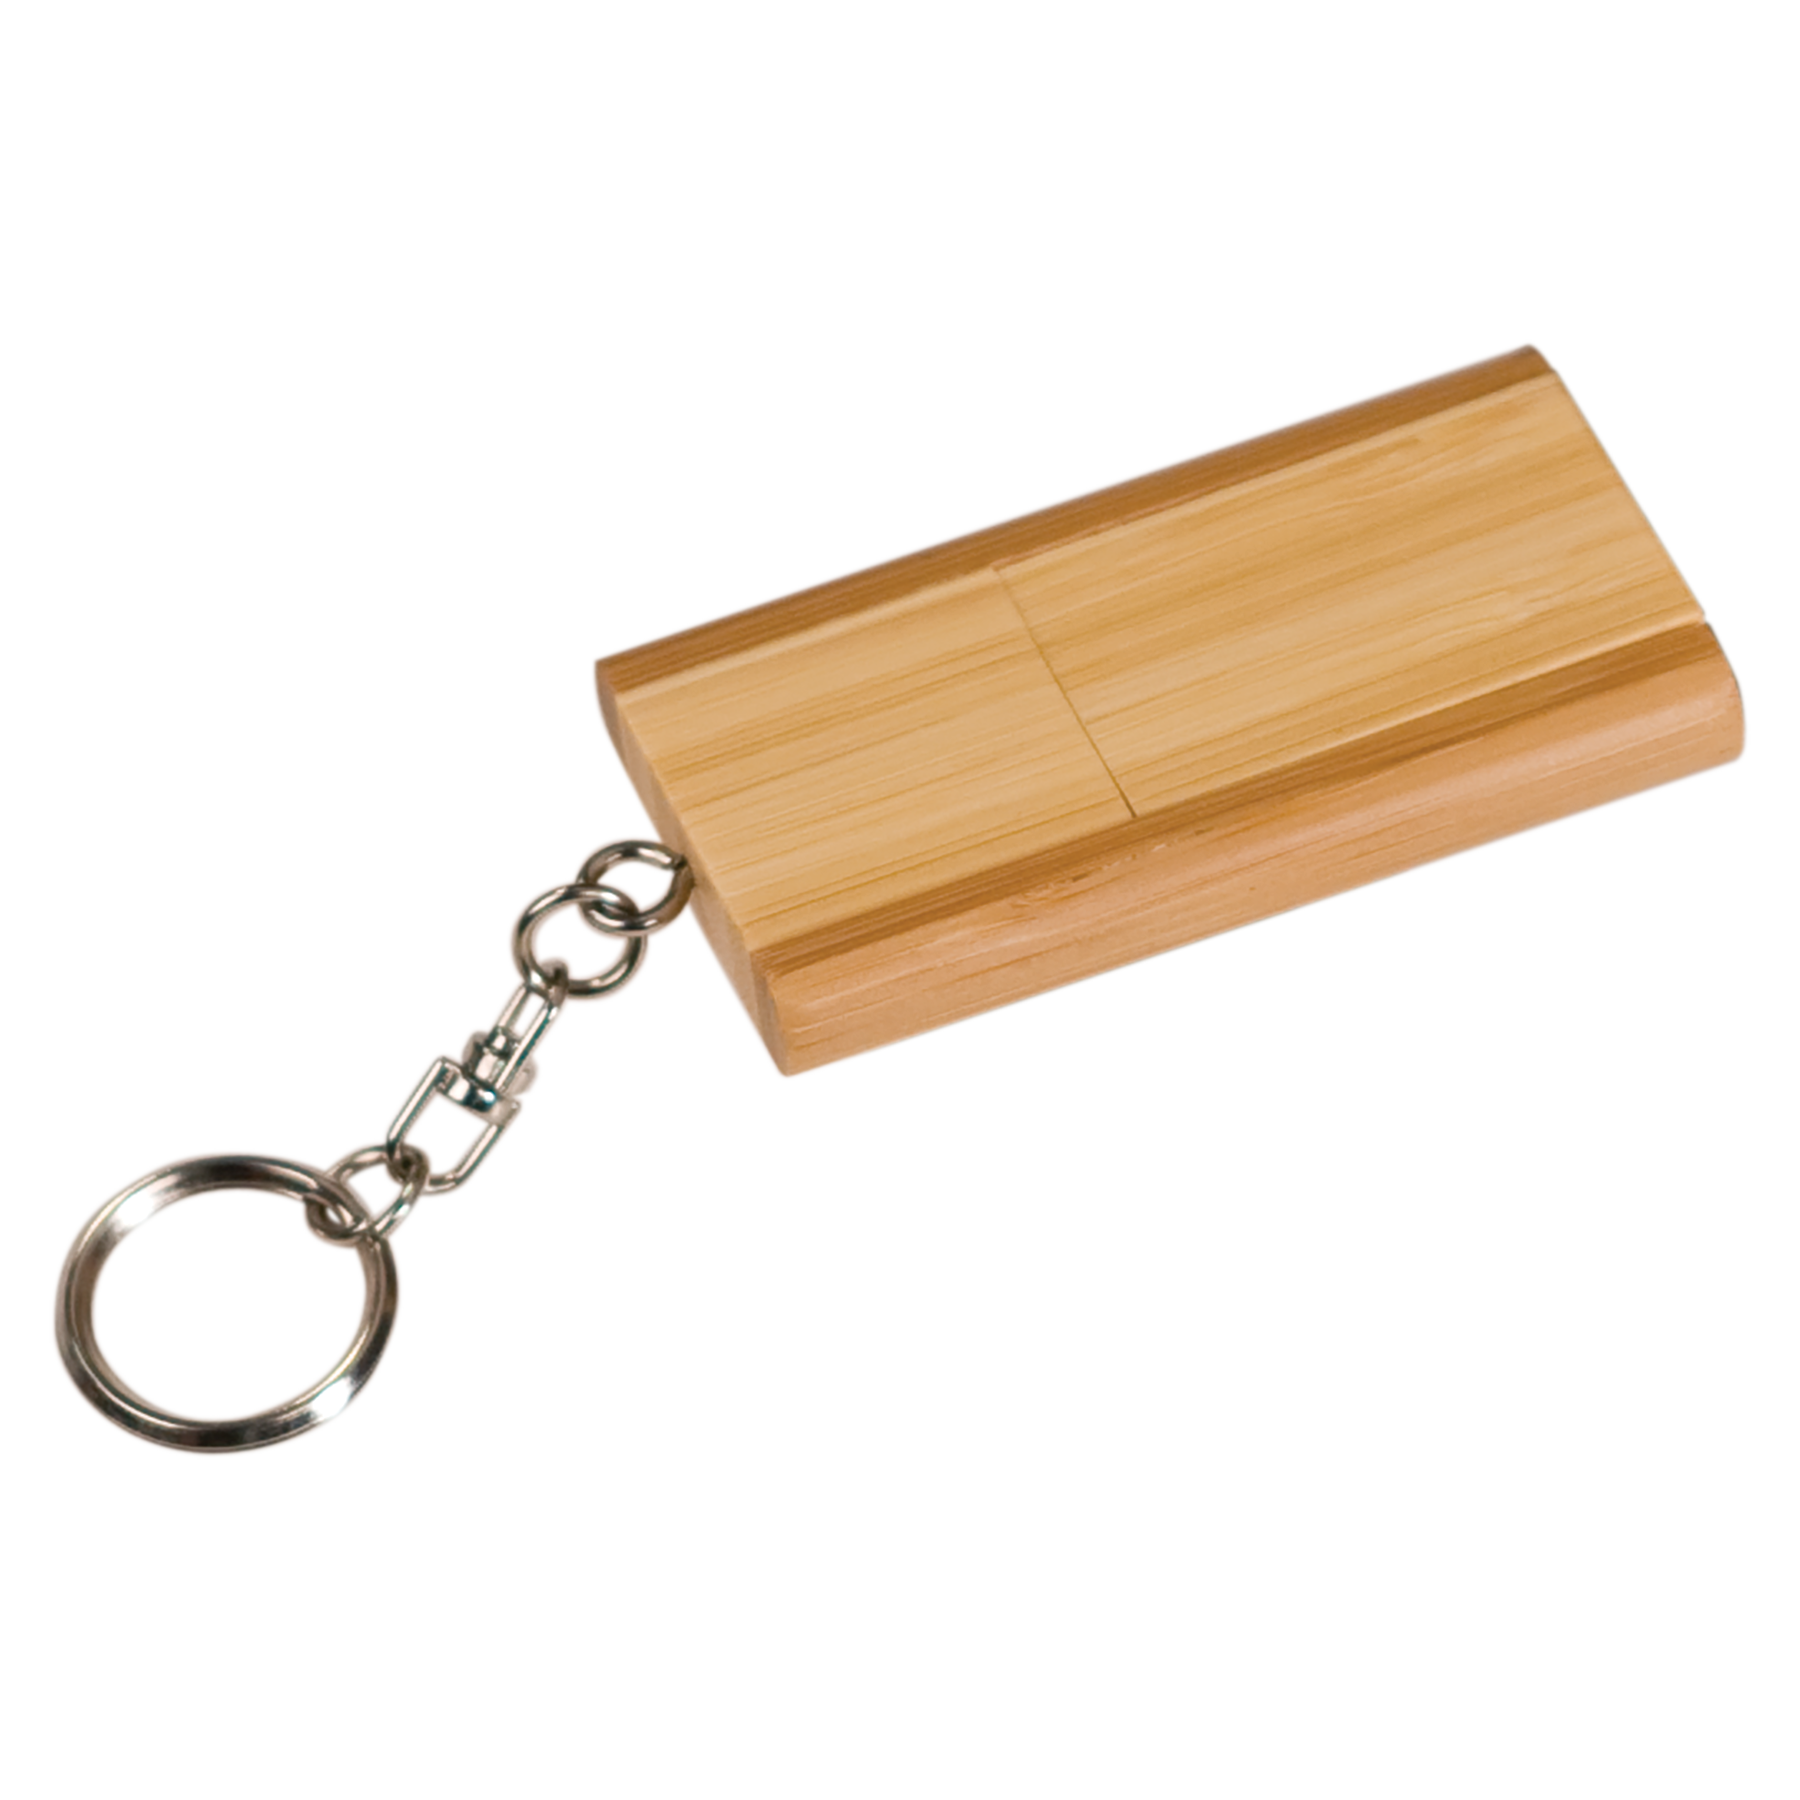 1 3/8" x 2 3/8" 8GB 2-Tone Bamboo Flip Style USB Flash Drive with Keychain